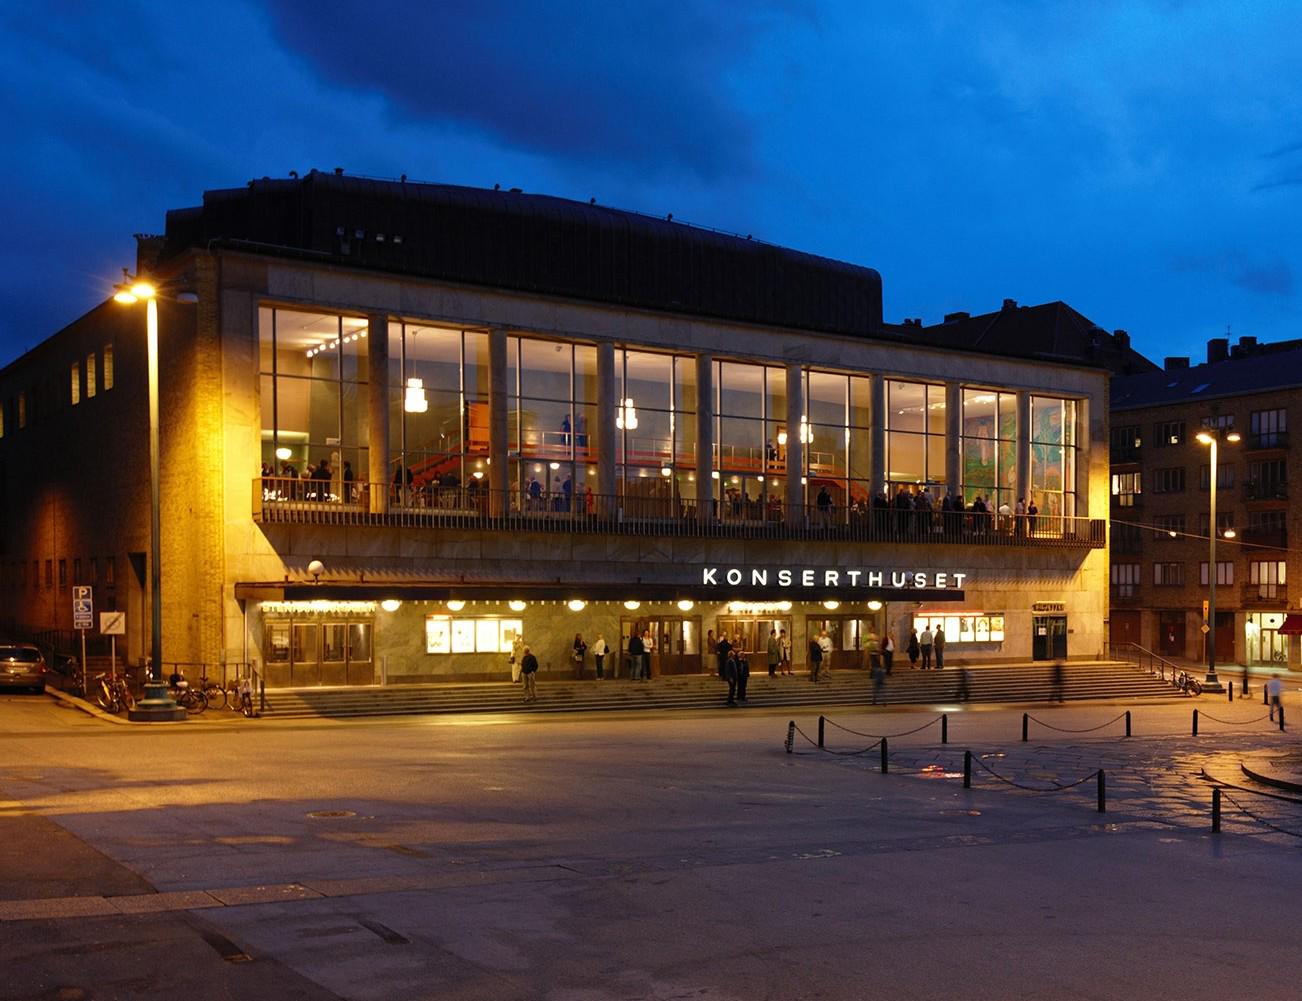 Gothenburg Concert Hall